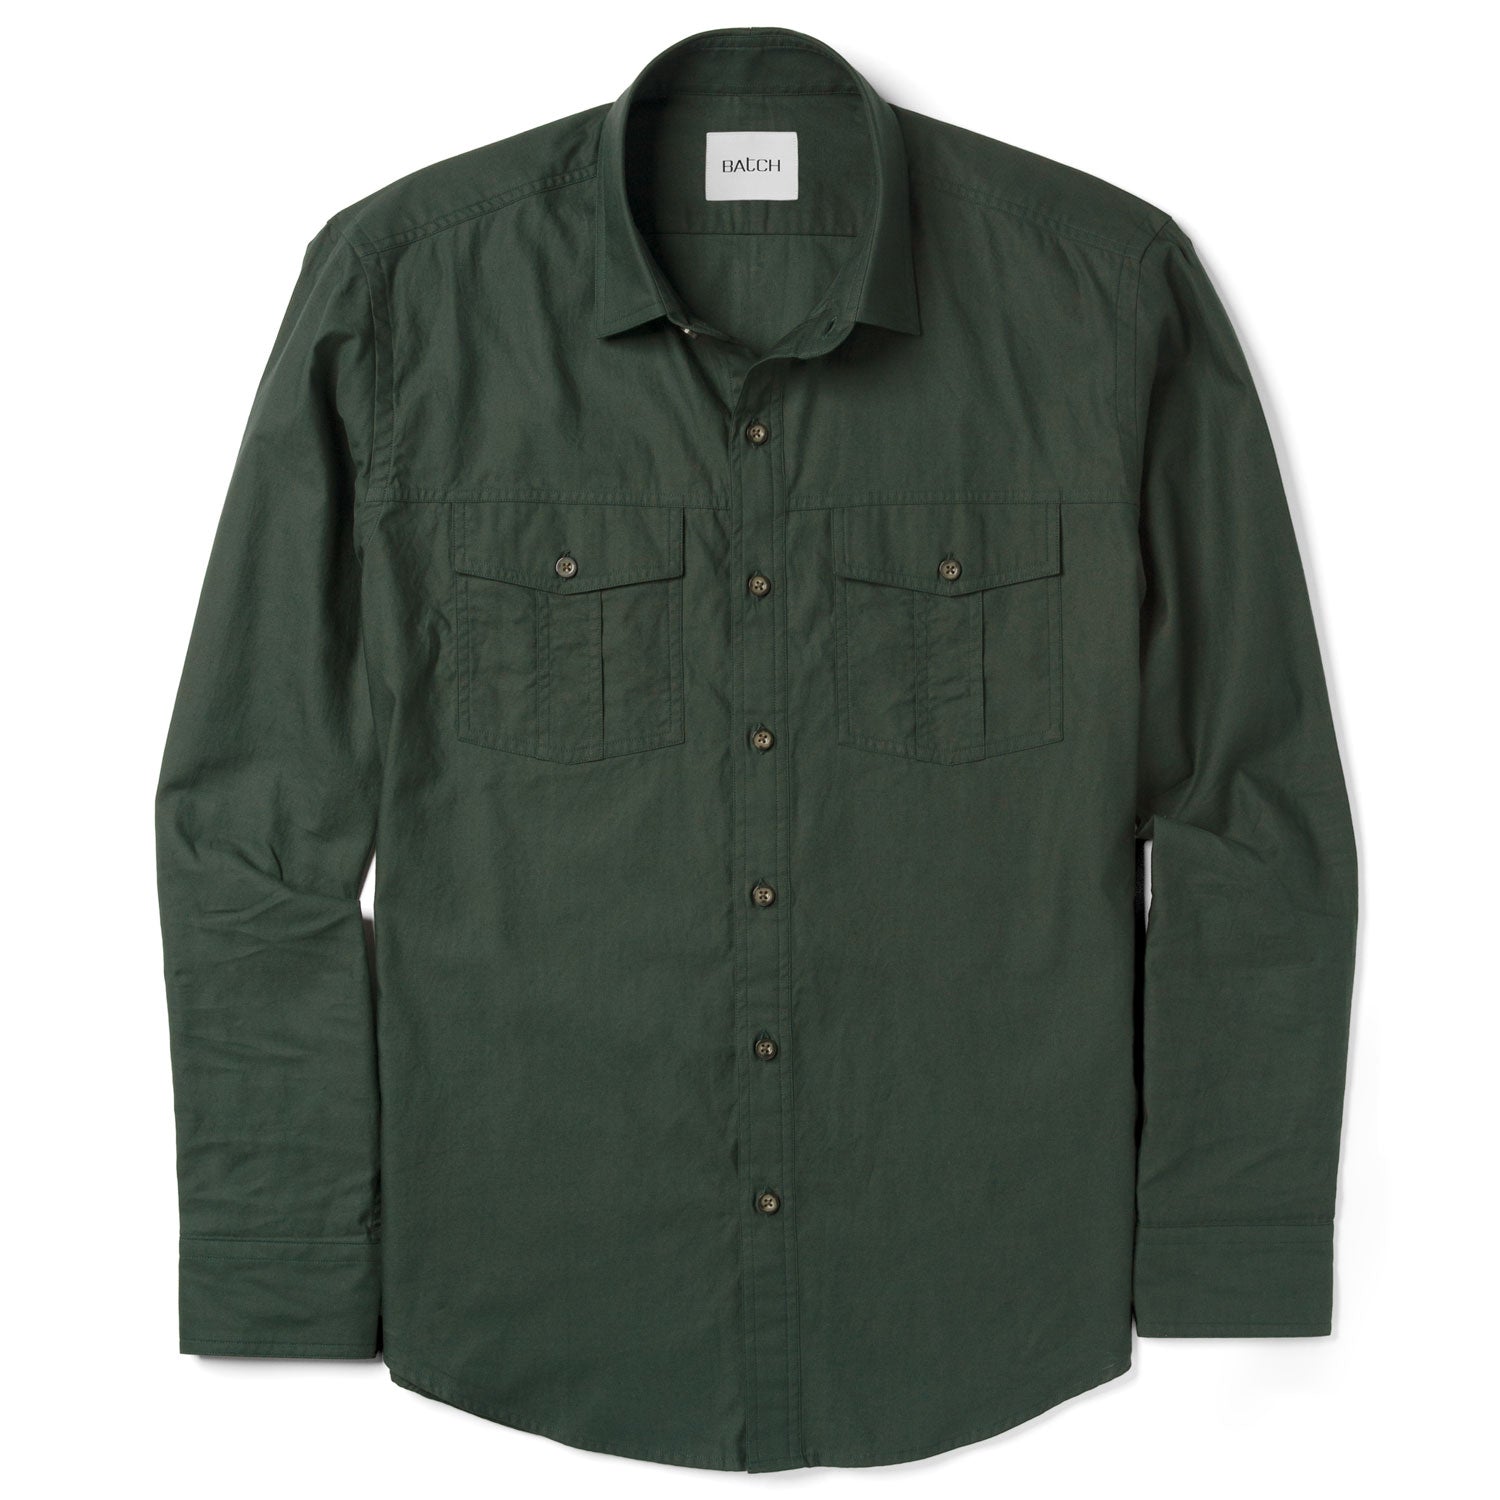 Primer Utility Shirt – Olive Green Mercerized Cotton